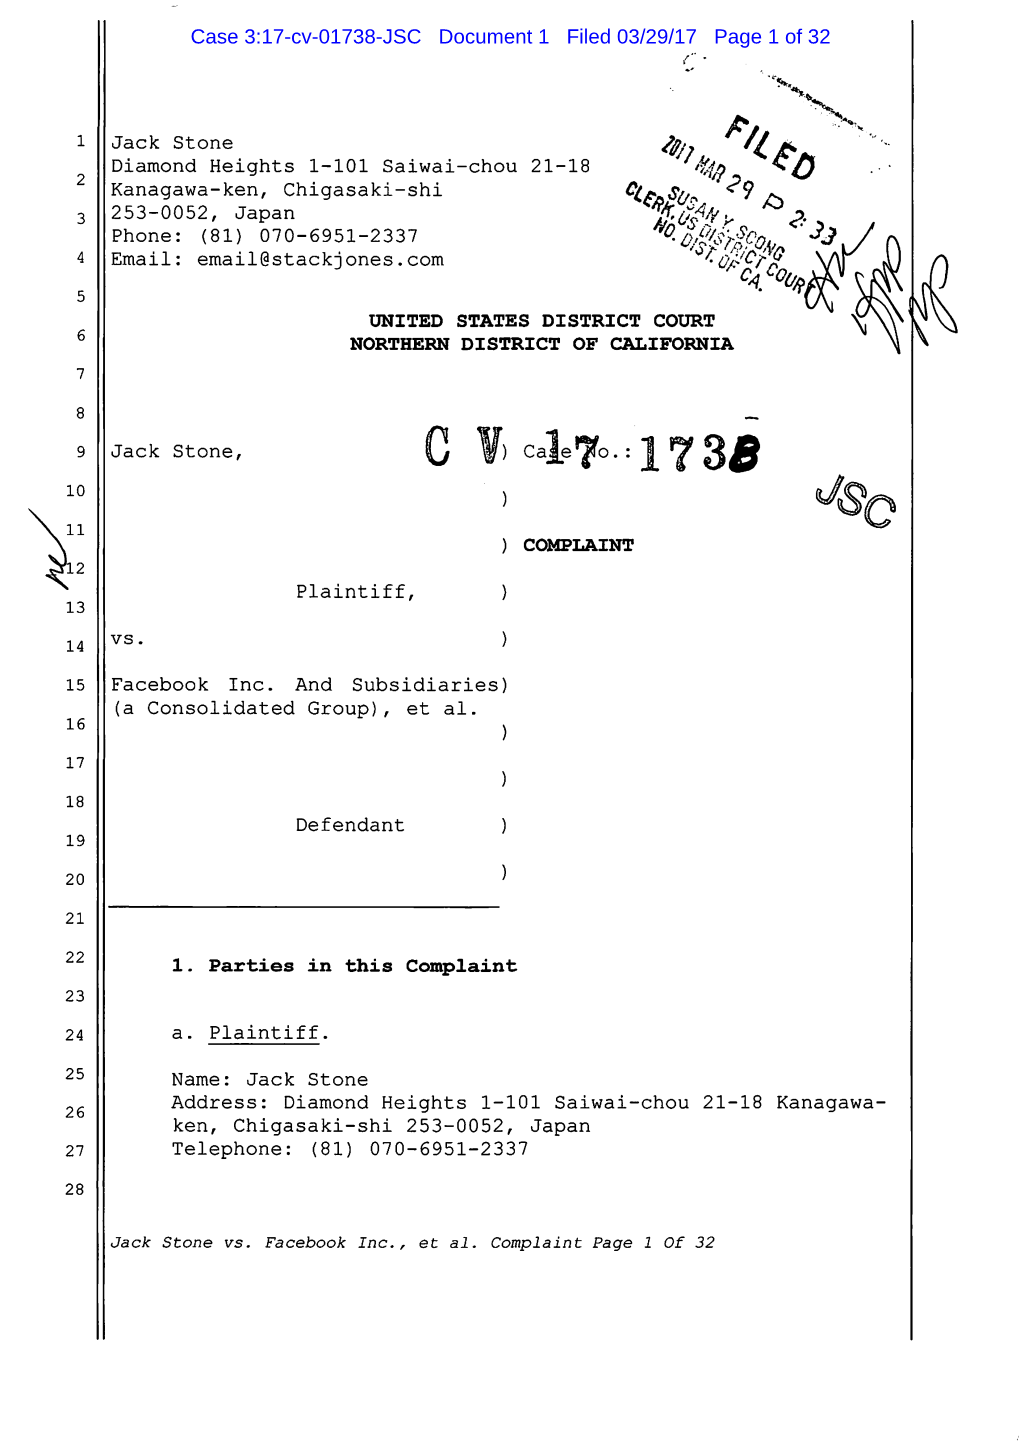 Case 3:17-Cv-01738-JSC Document 1 Filed 03/29/17 Page 1 of 32